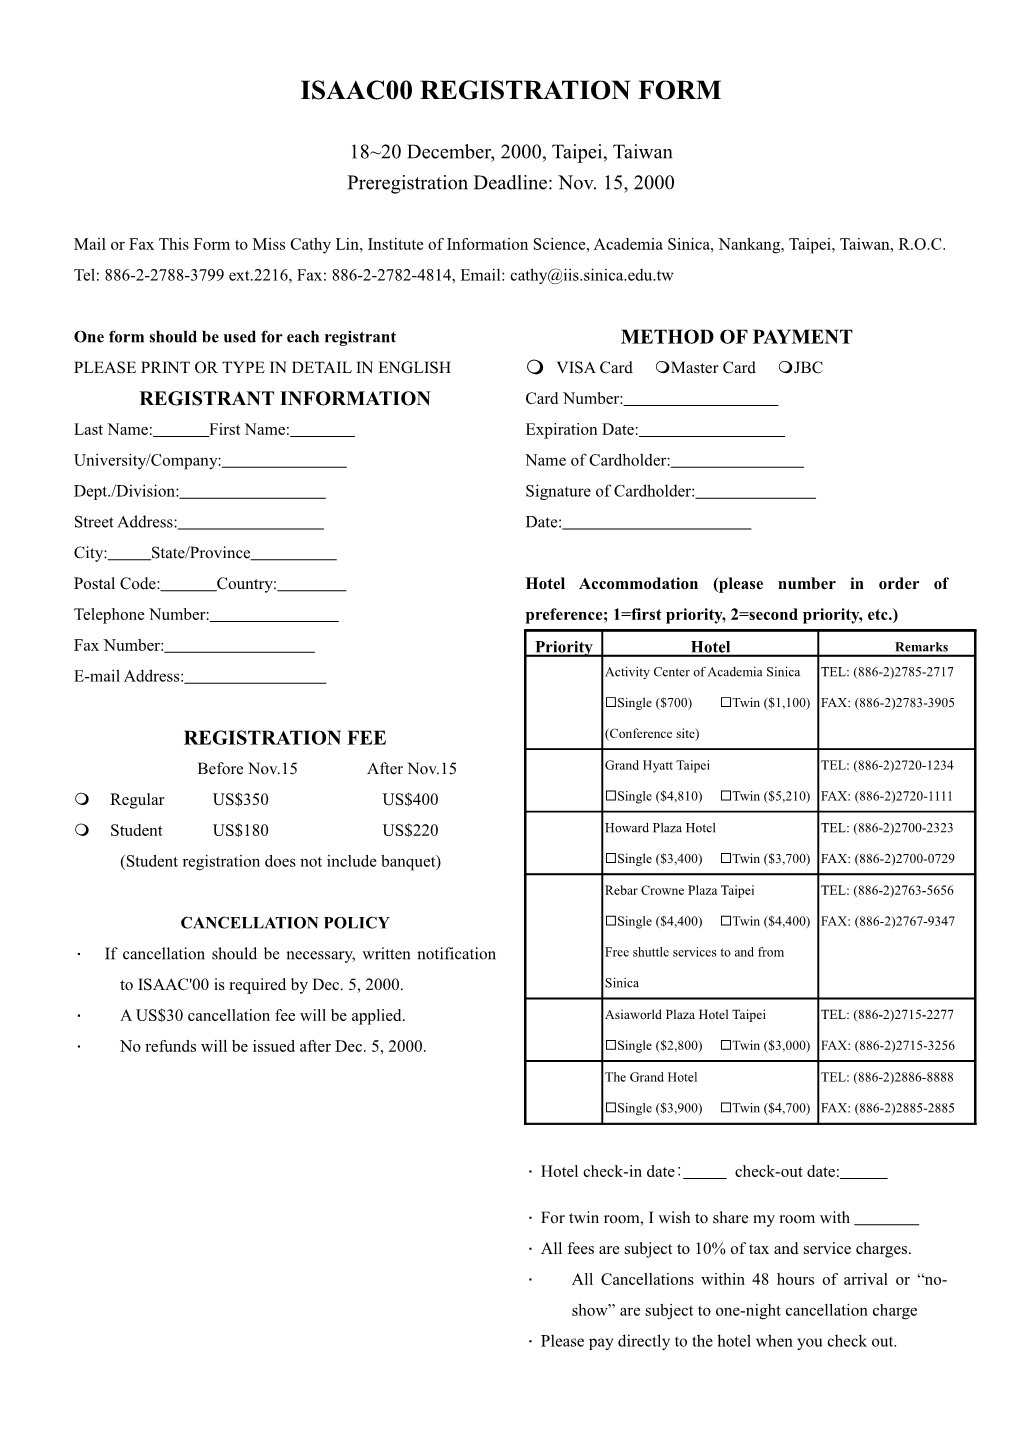 Isaac00 Registration Form